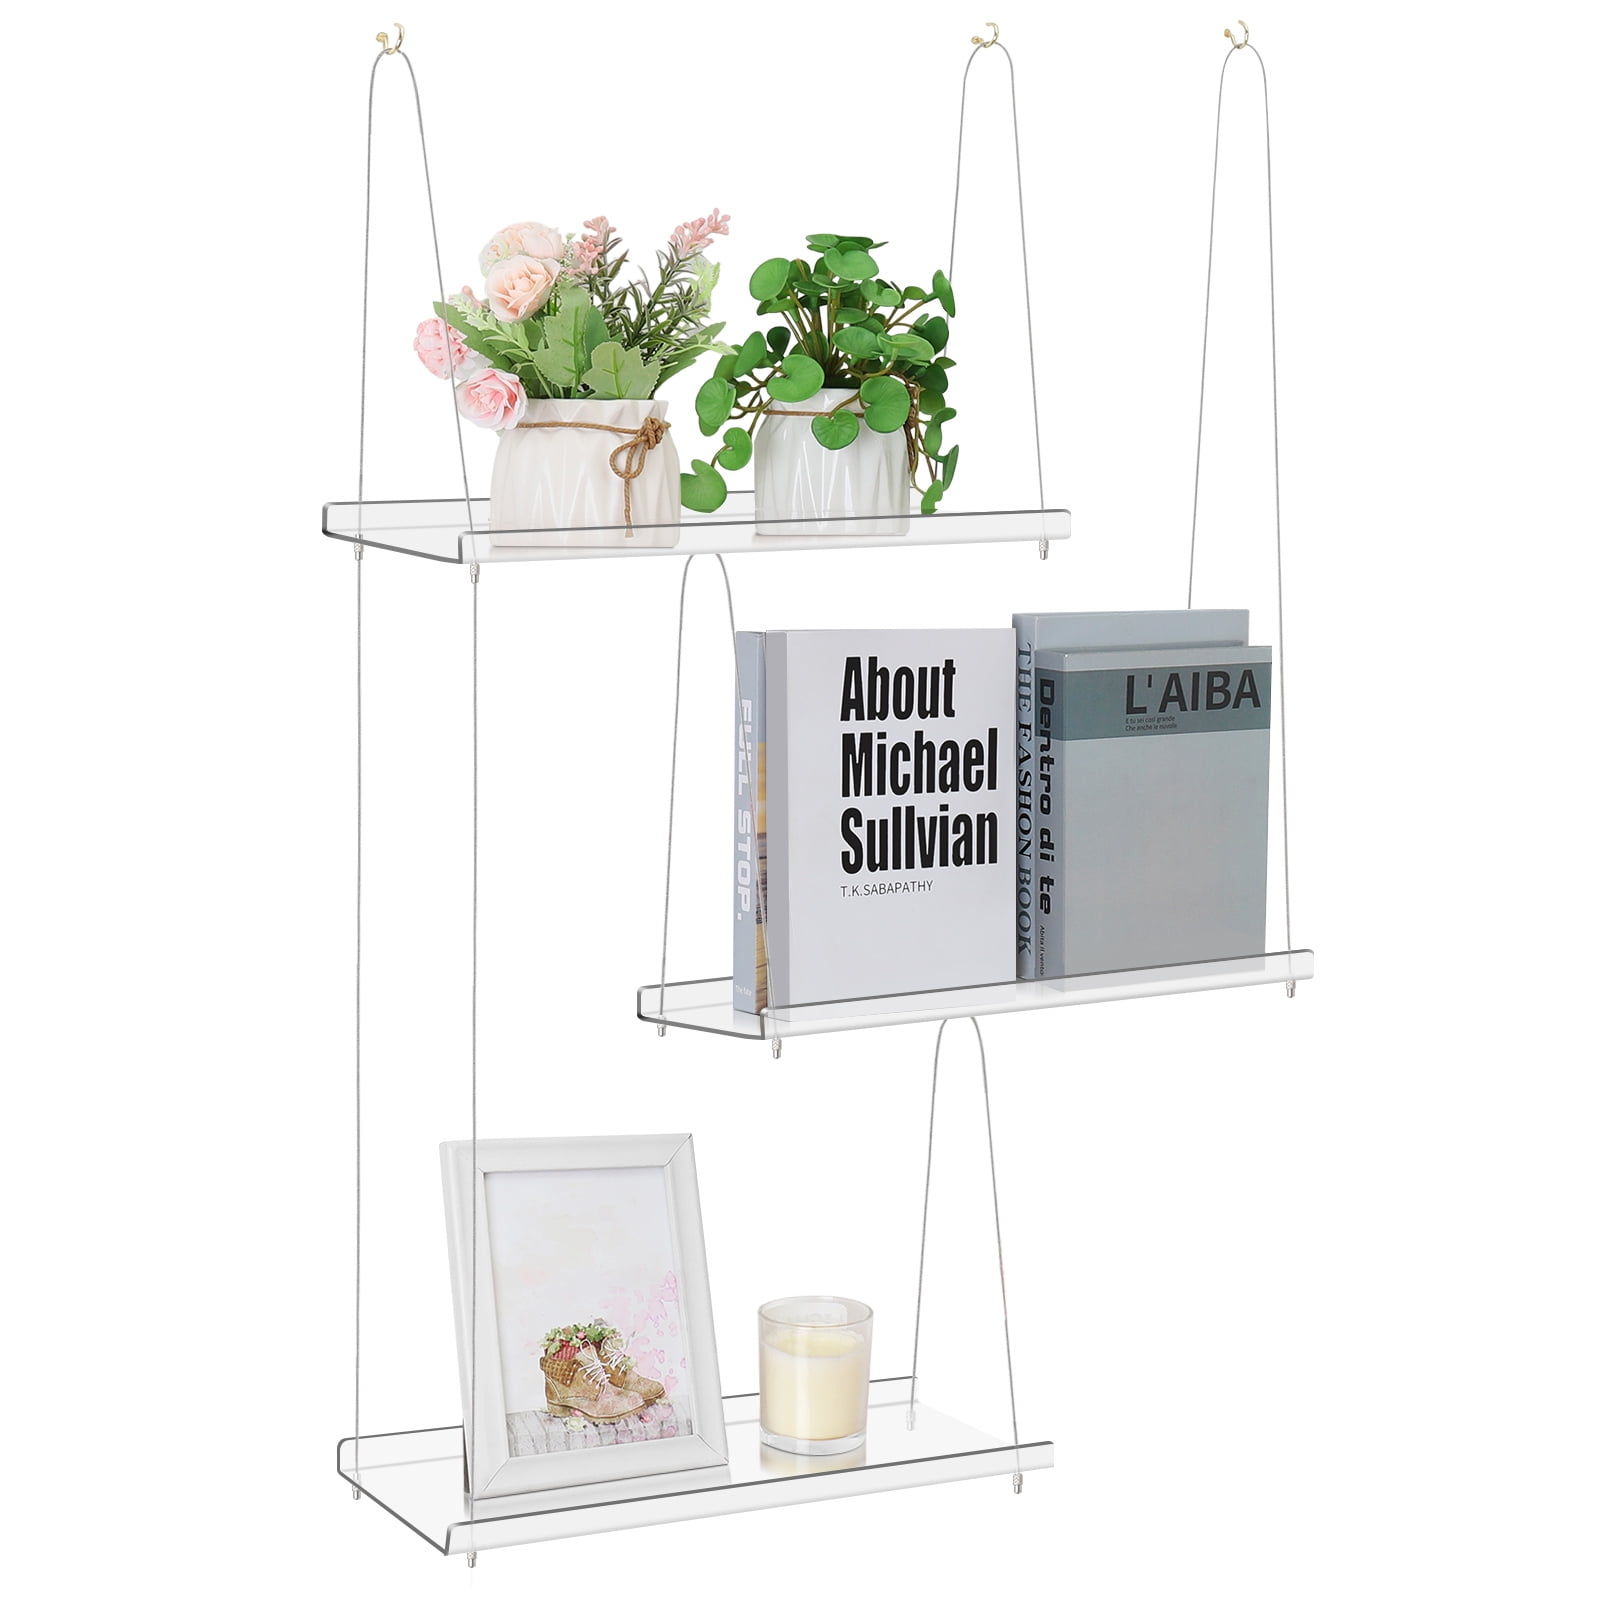 Bocaoying Acrylic Window Shelf for Plant, Hanging Window Plant